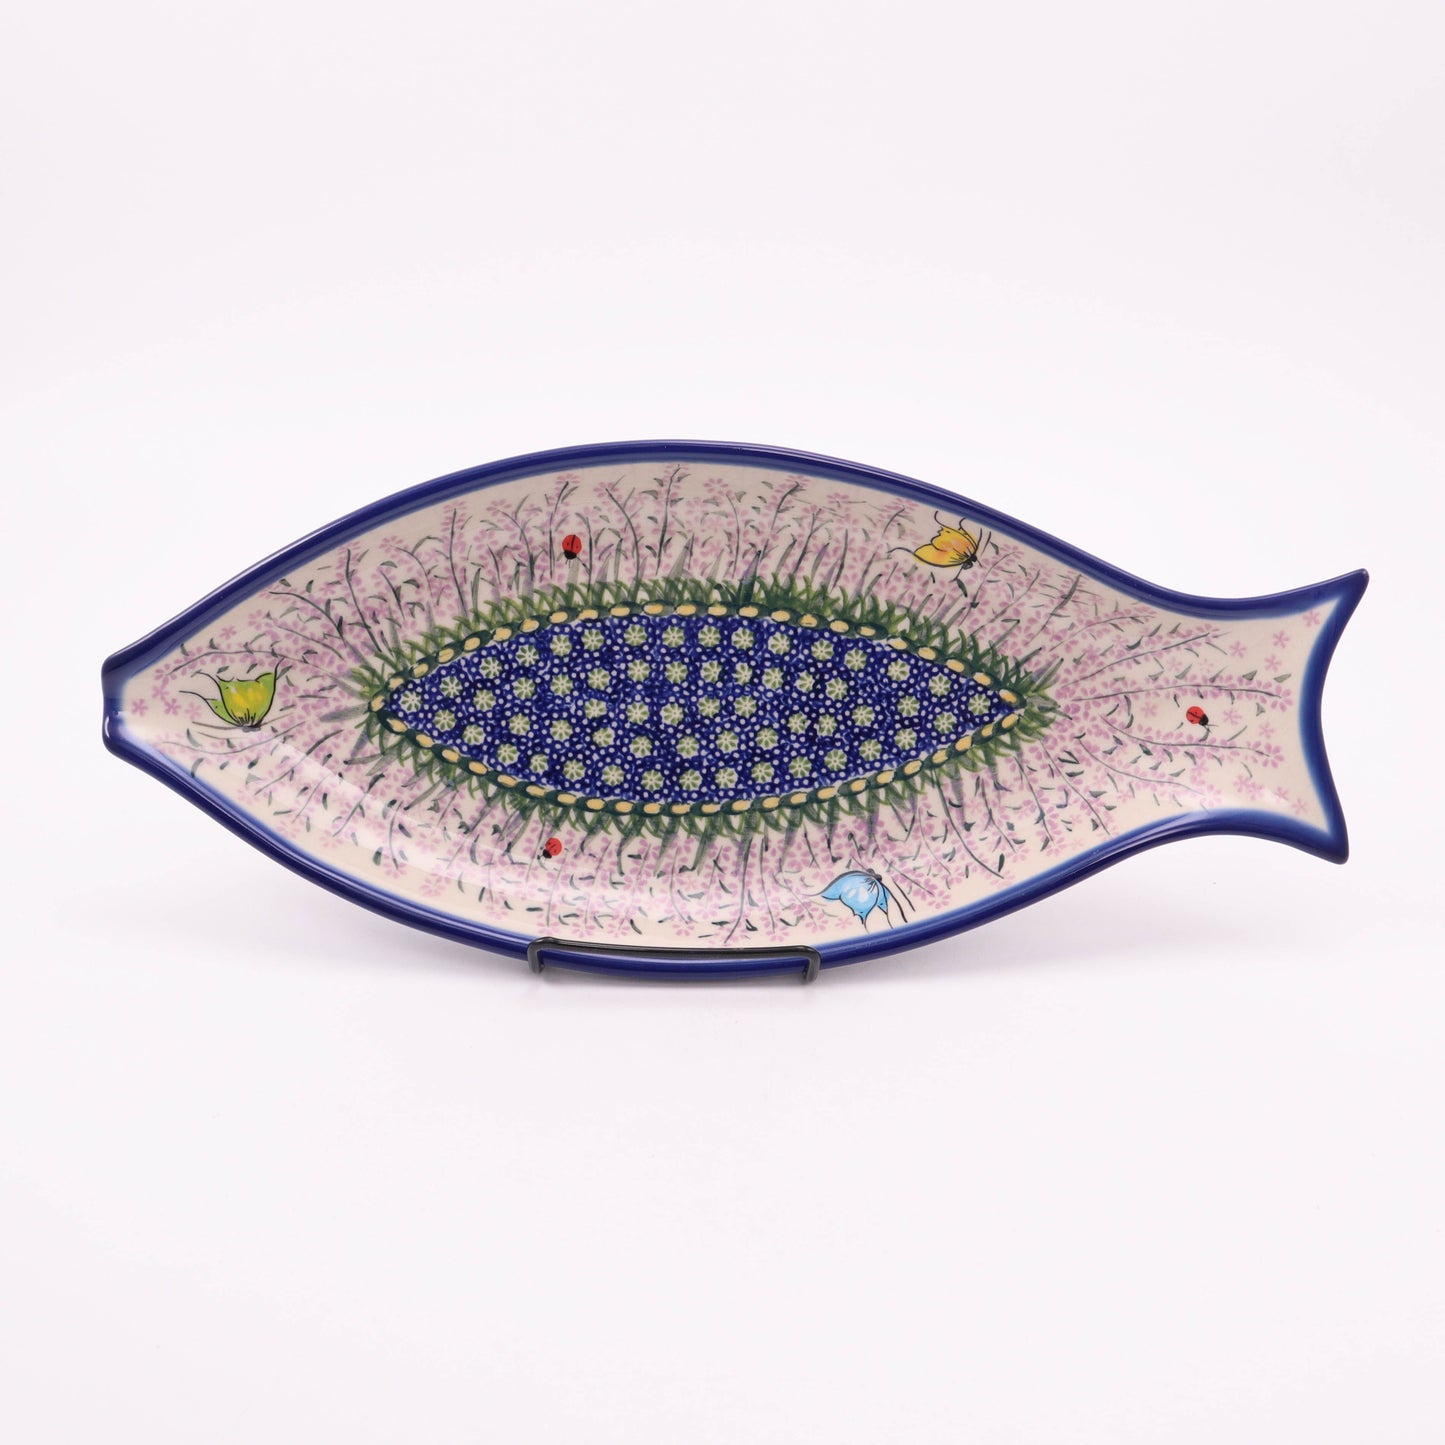 14"x7" Fish Platter. Pattern: Lavender Fields